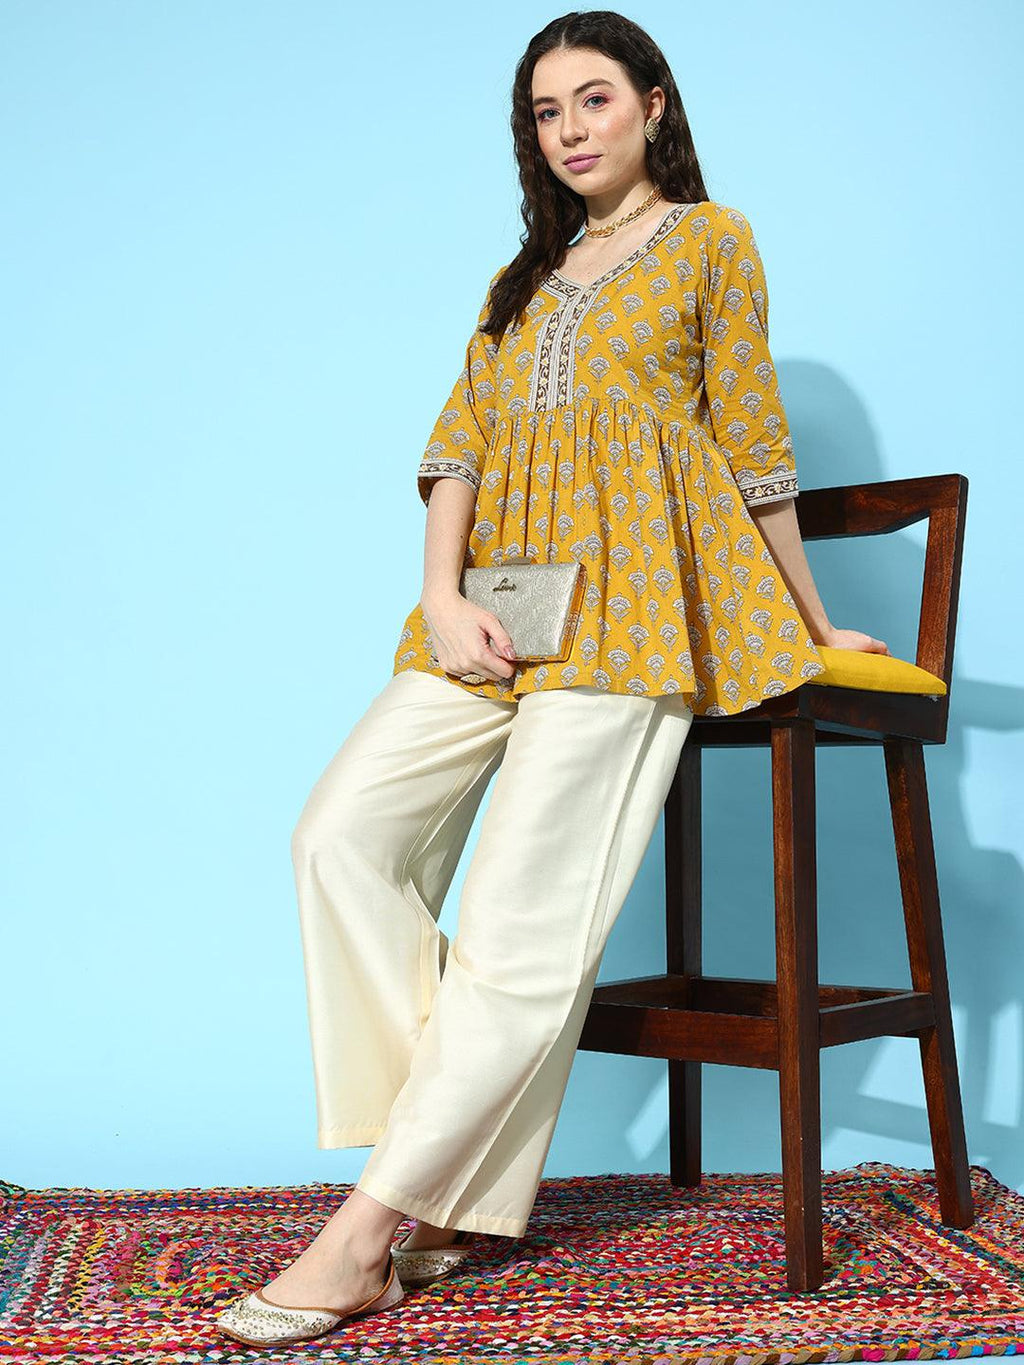 Women's Short Sleeves Floral Print & Satin Top Pyjama Set at Rs 198/set, Noida